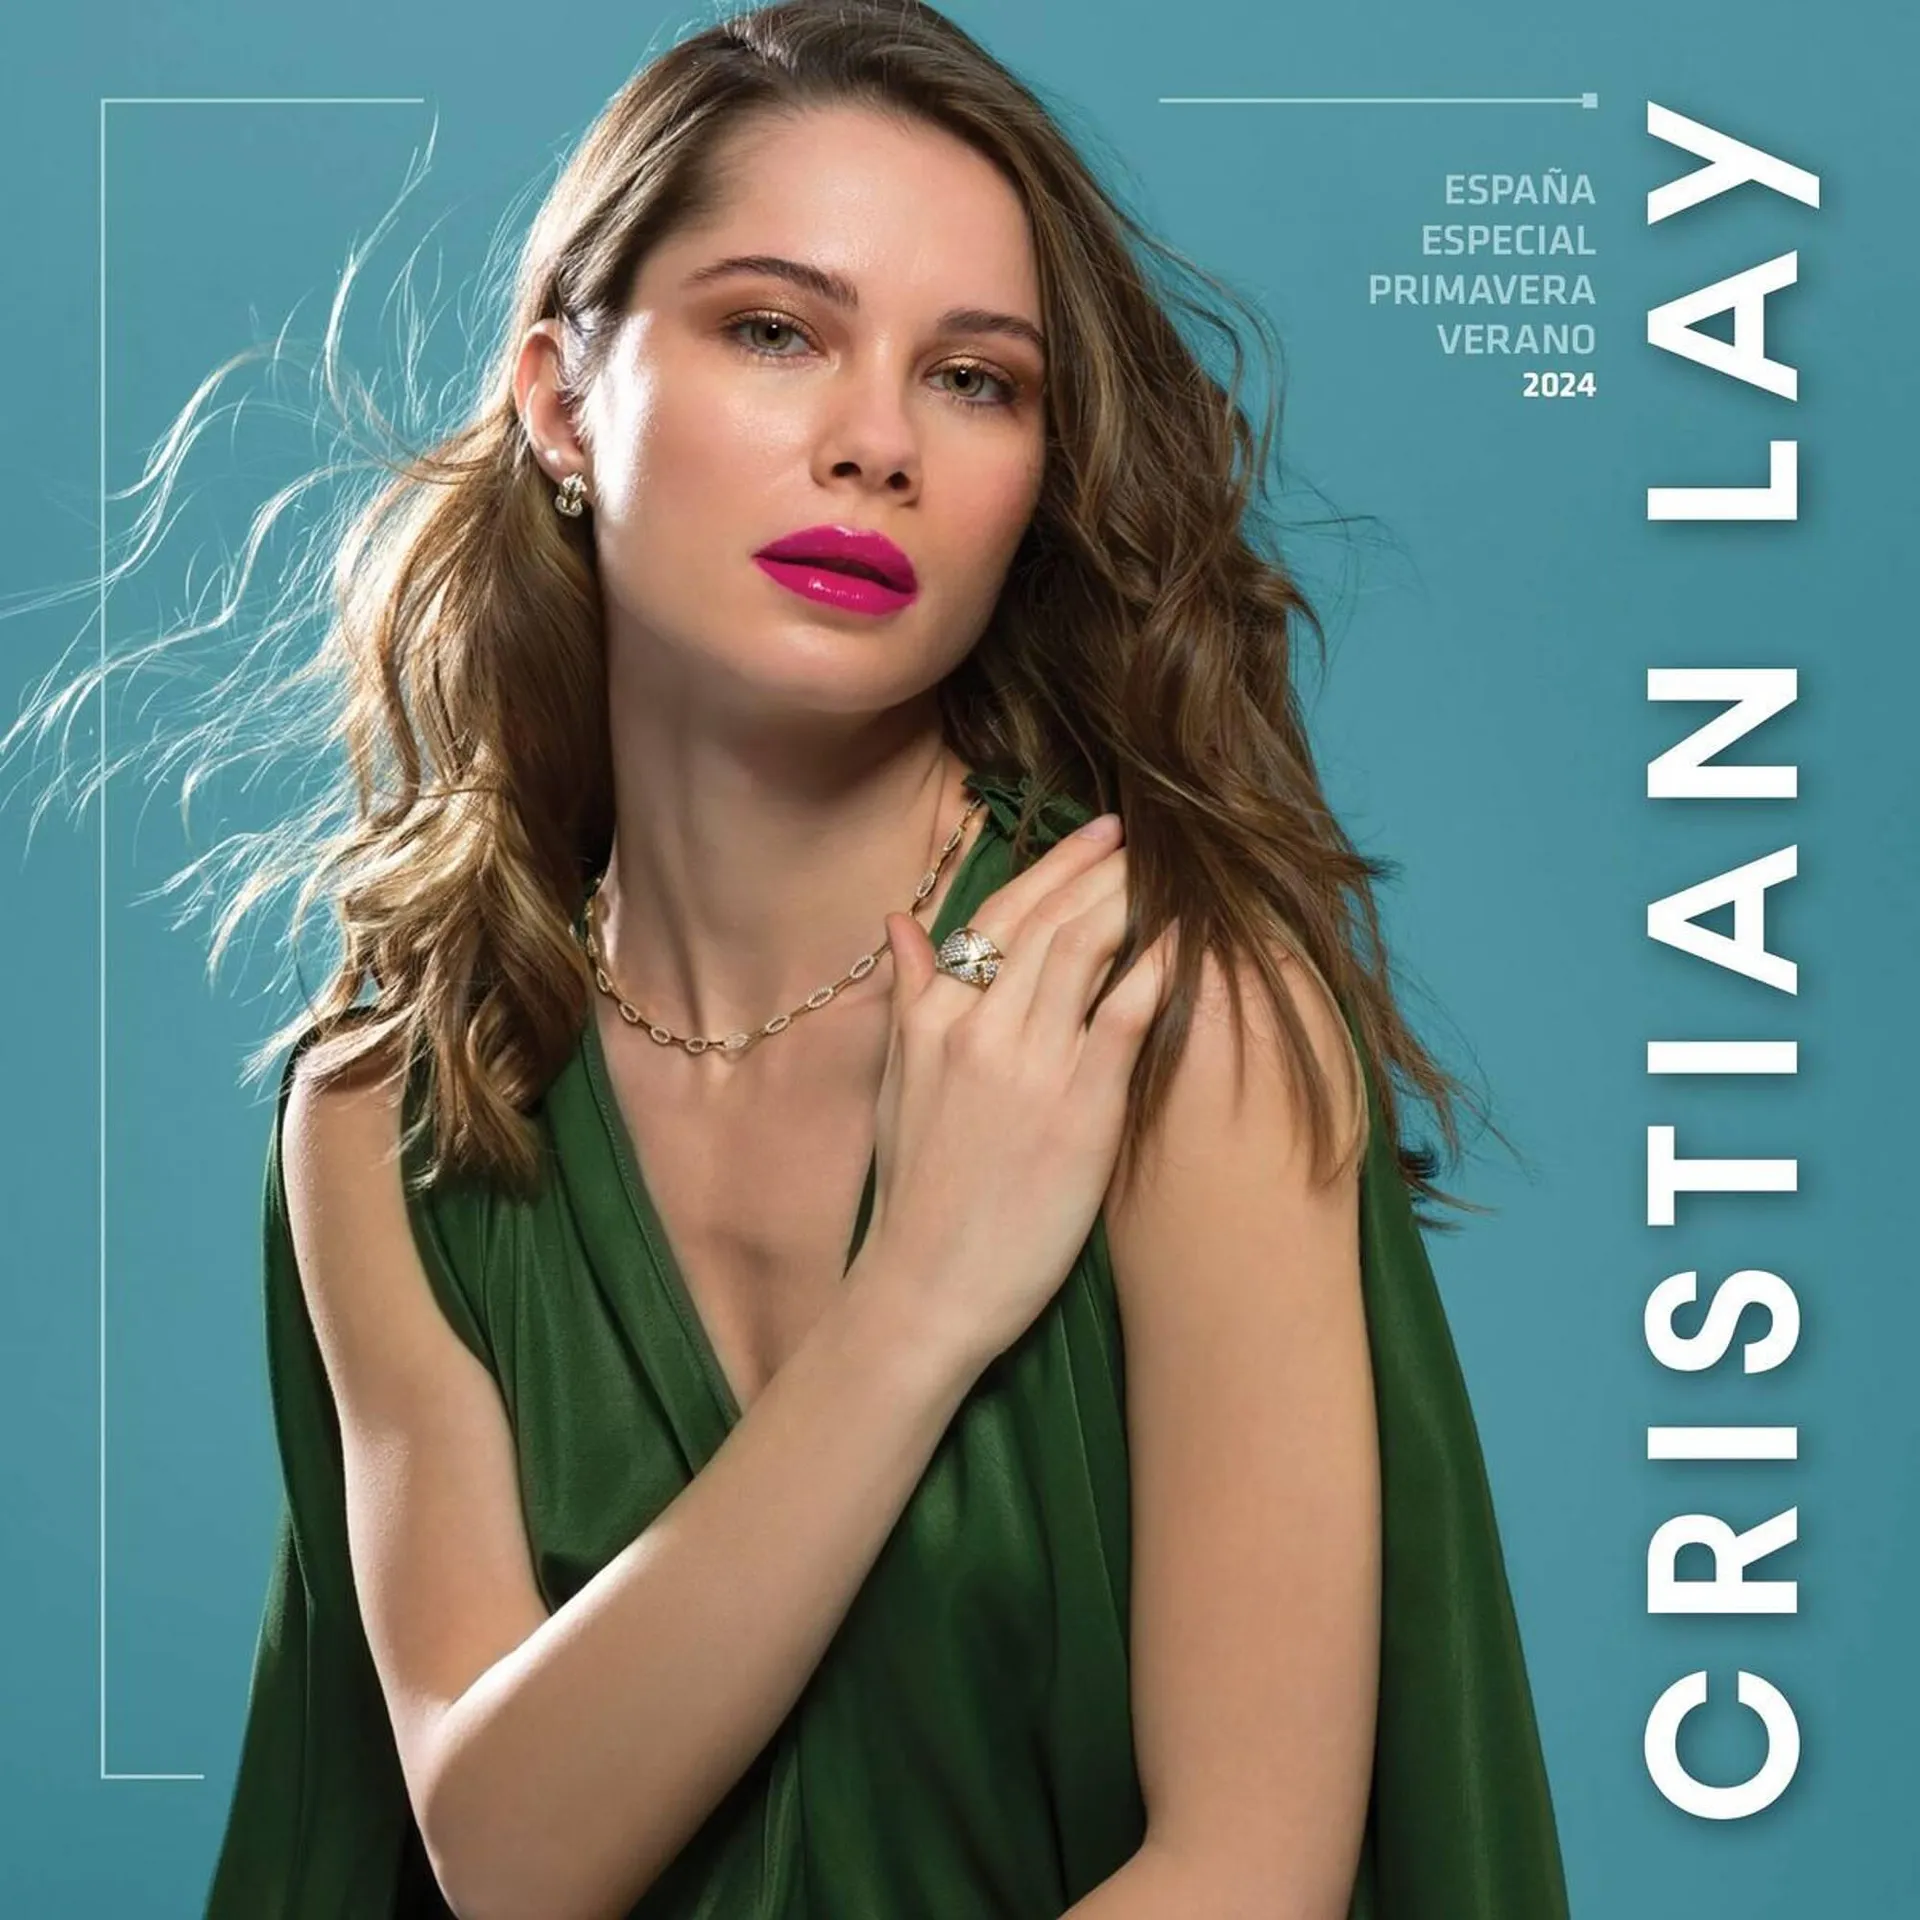 Catálogo Cristian Lay - 1